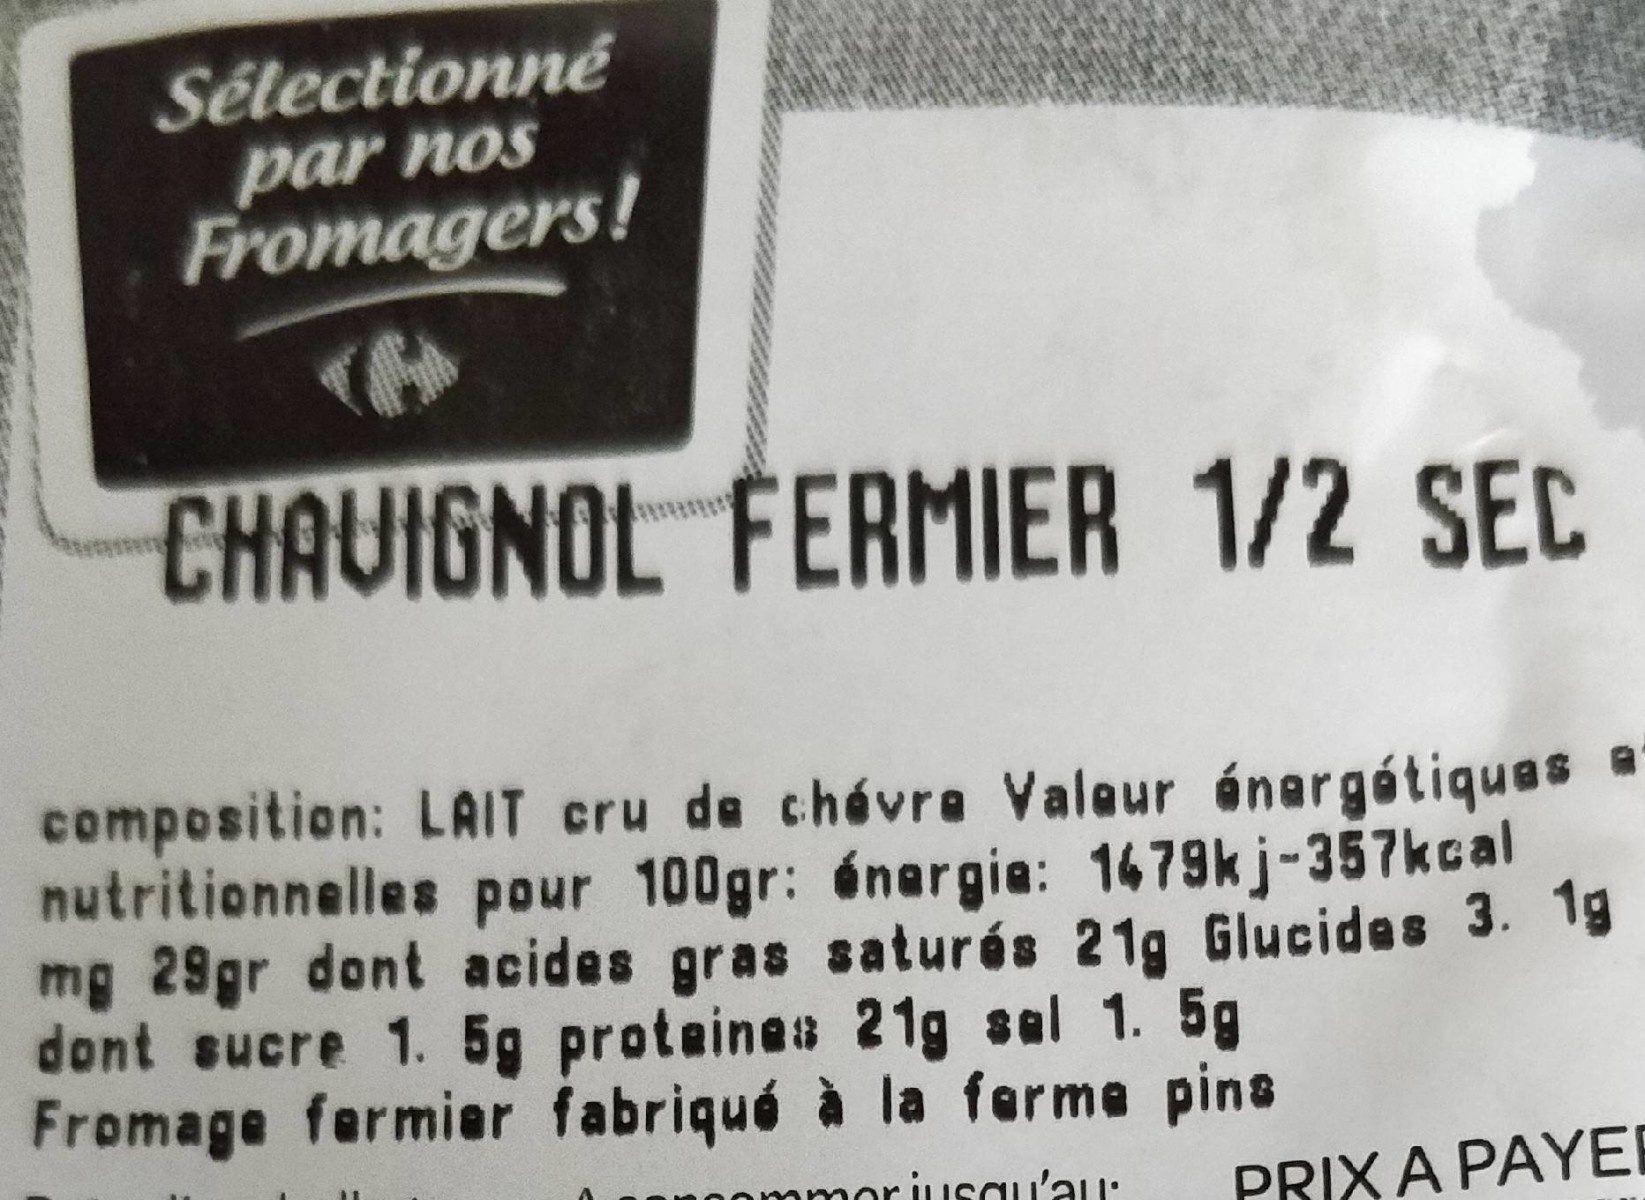 Chavignol fermier 1/2 sec - Product - fr